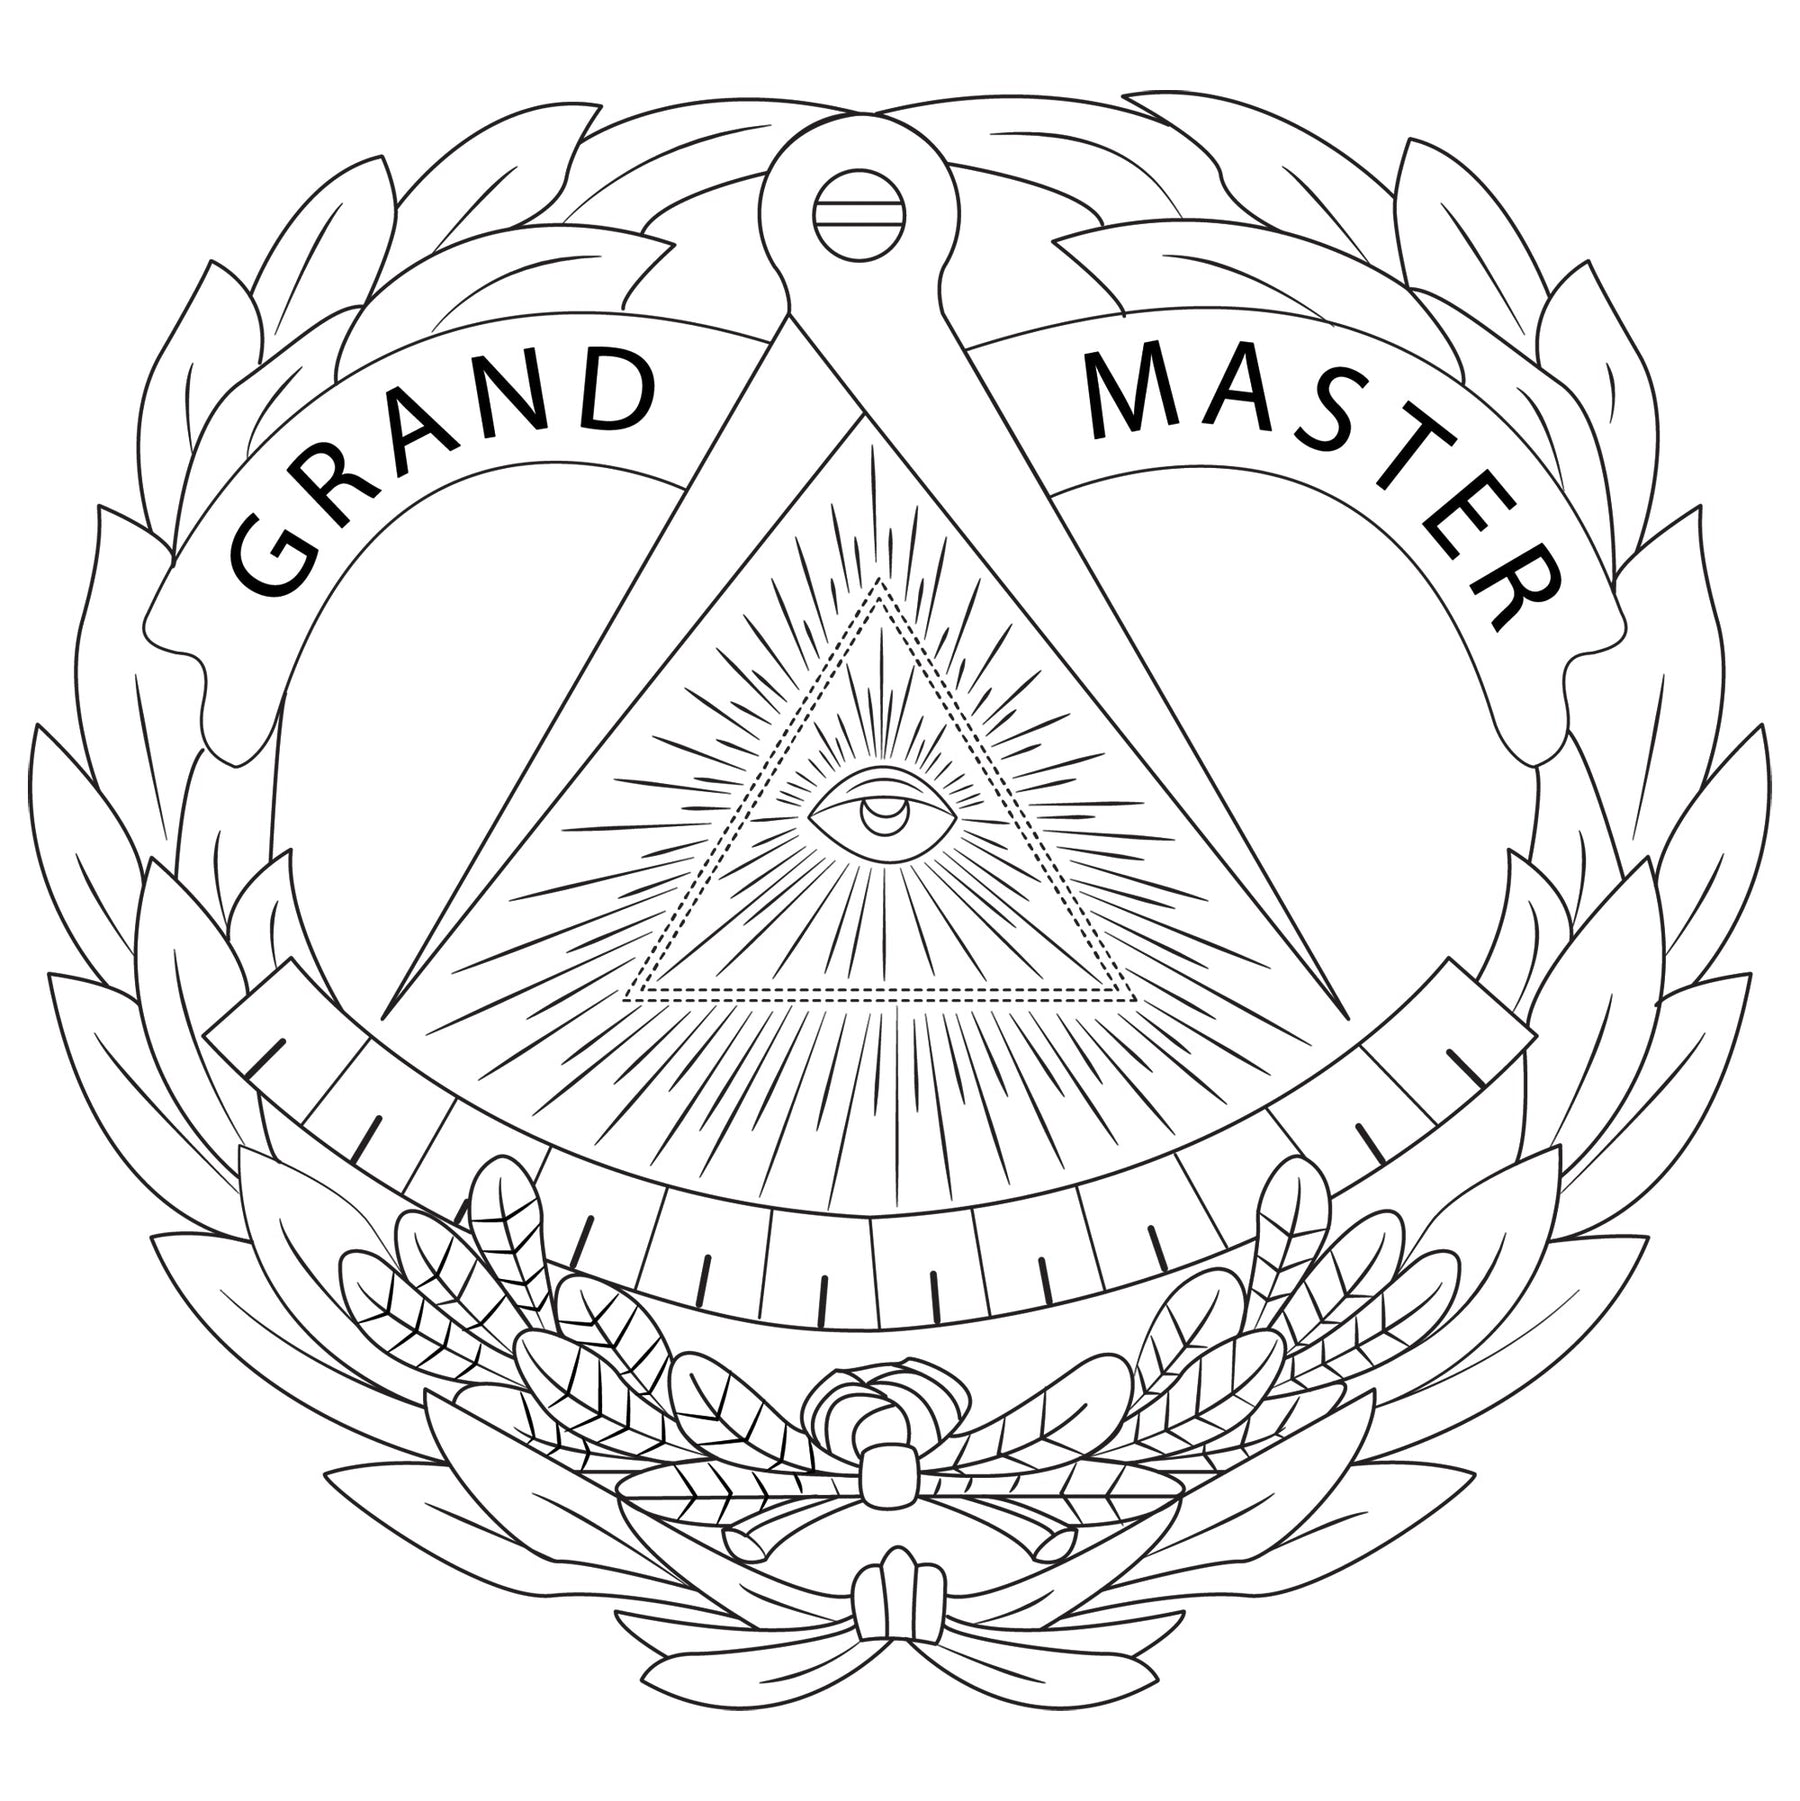 Grand Master Blue Lodge Travel Bag - Vintage Brown Leather - Bricks Masons